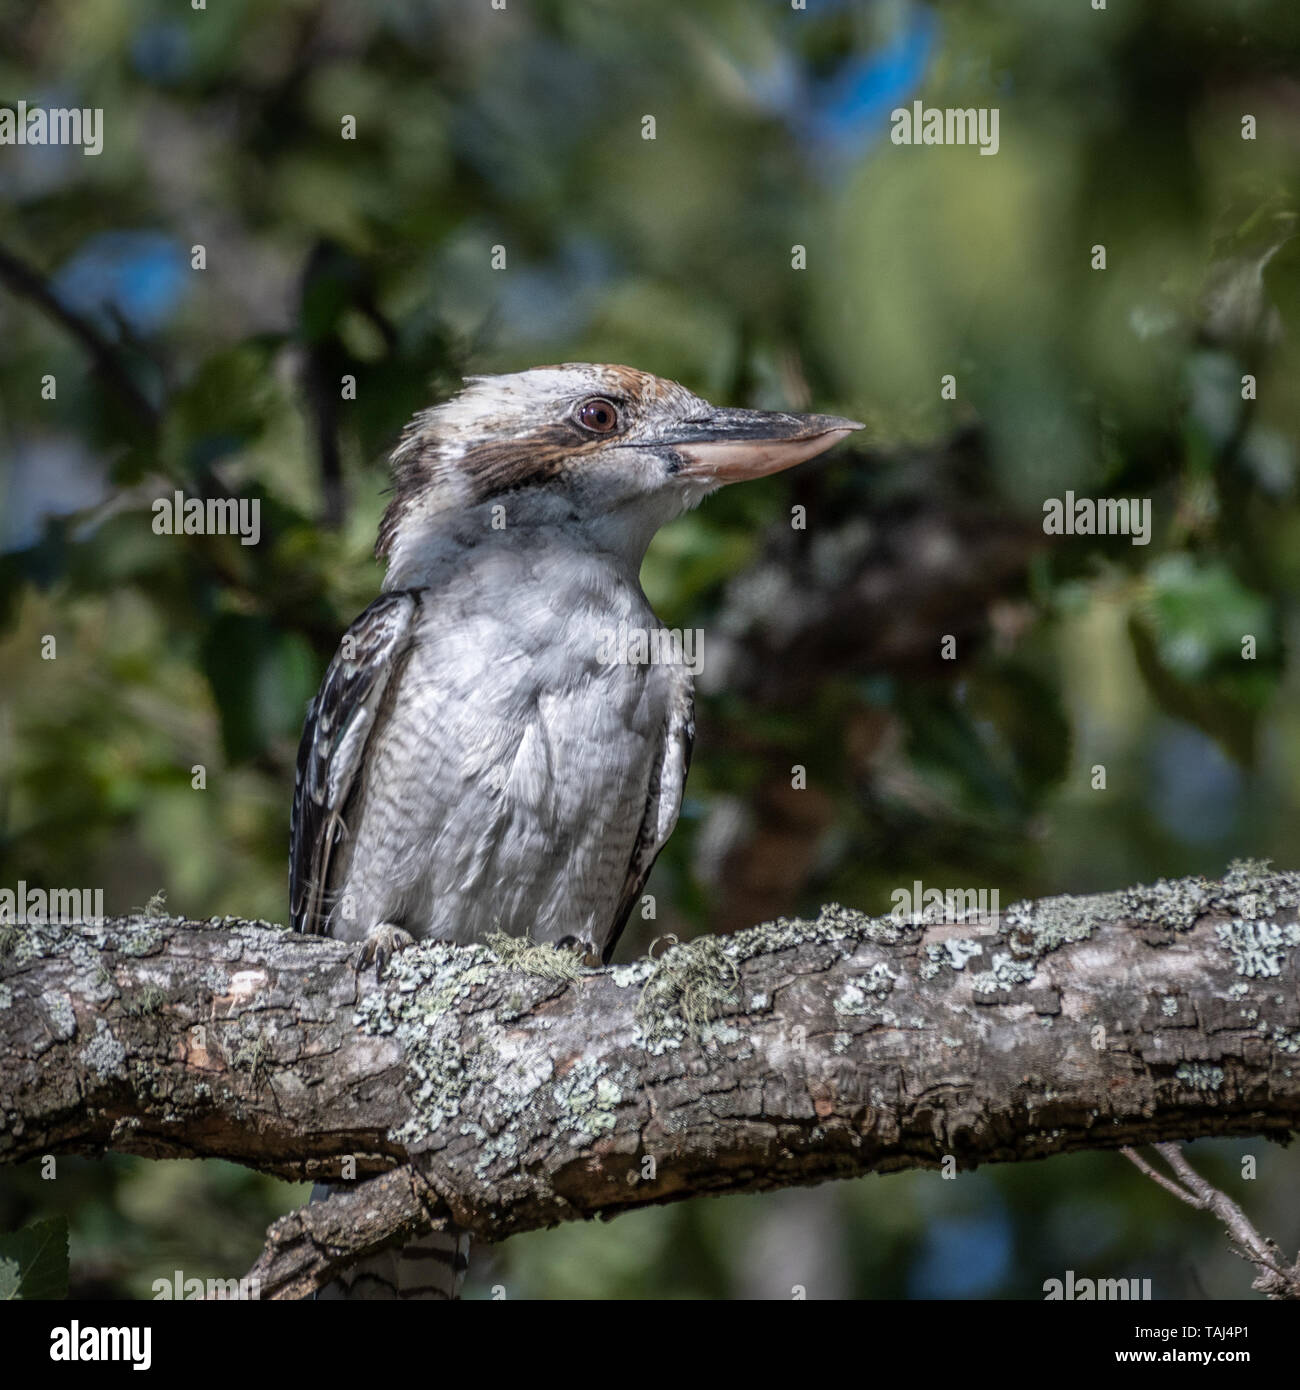 Kookaburra (Dacelo gigas), Perched in Tree Stock Photo